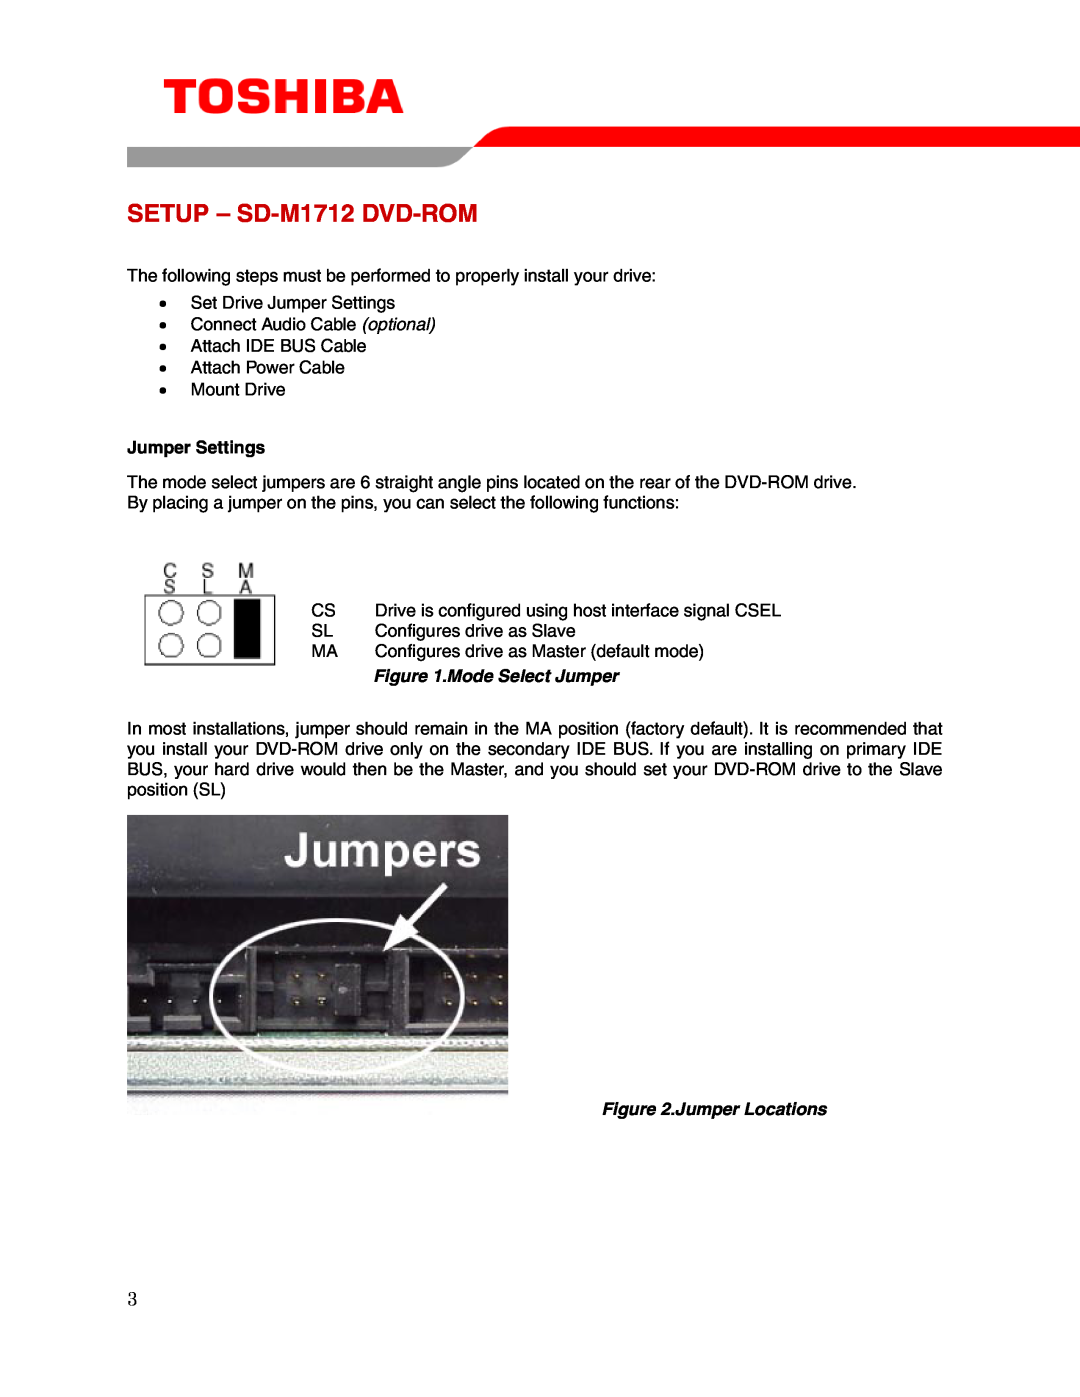 Toshiba user manual SETUP - SD-M1712 DVD-ROM, Jumper Settings, Mode Select Jumper, Jumper Locations 